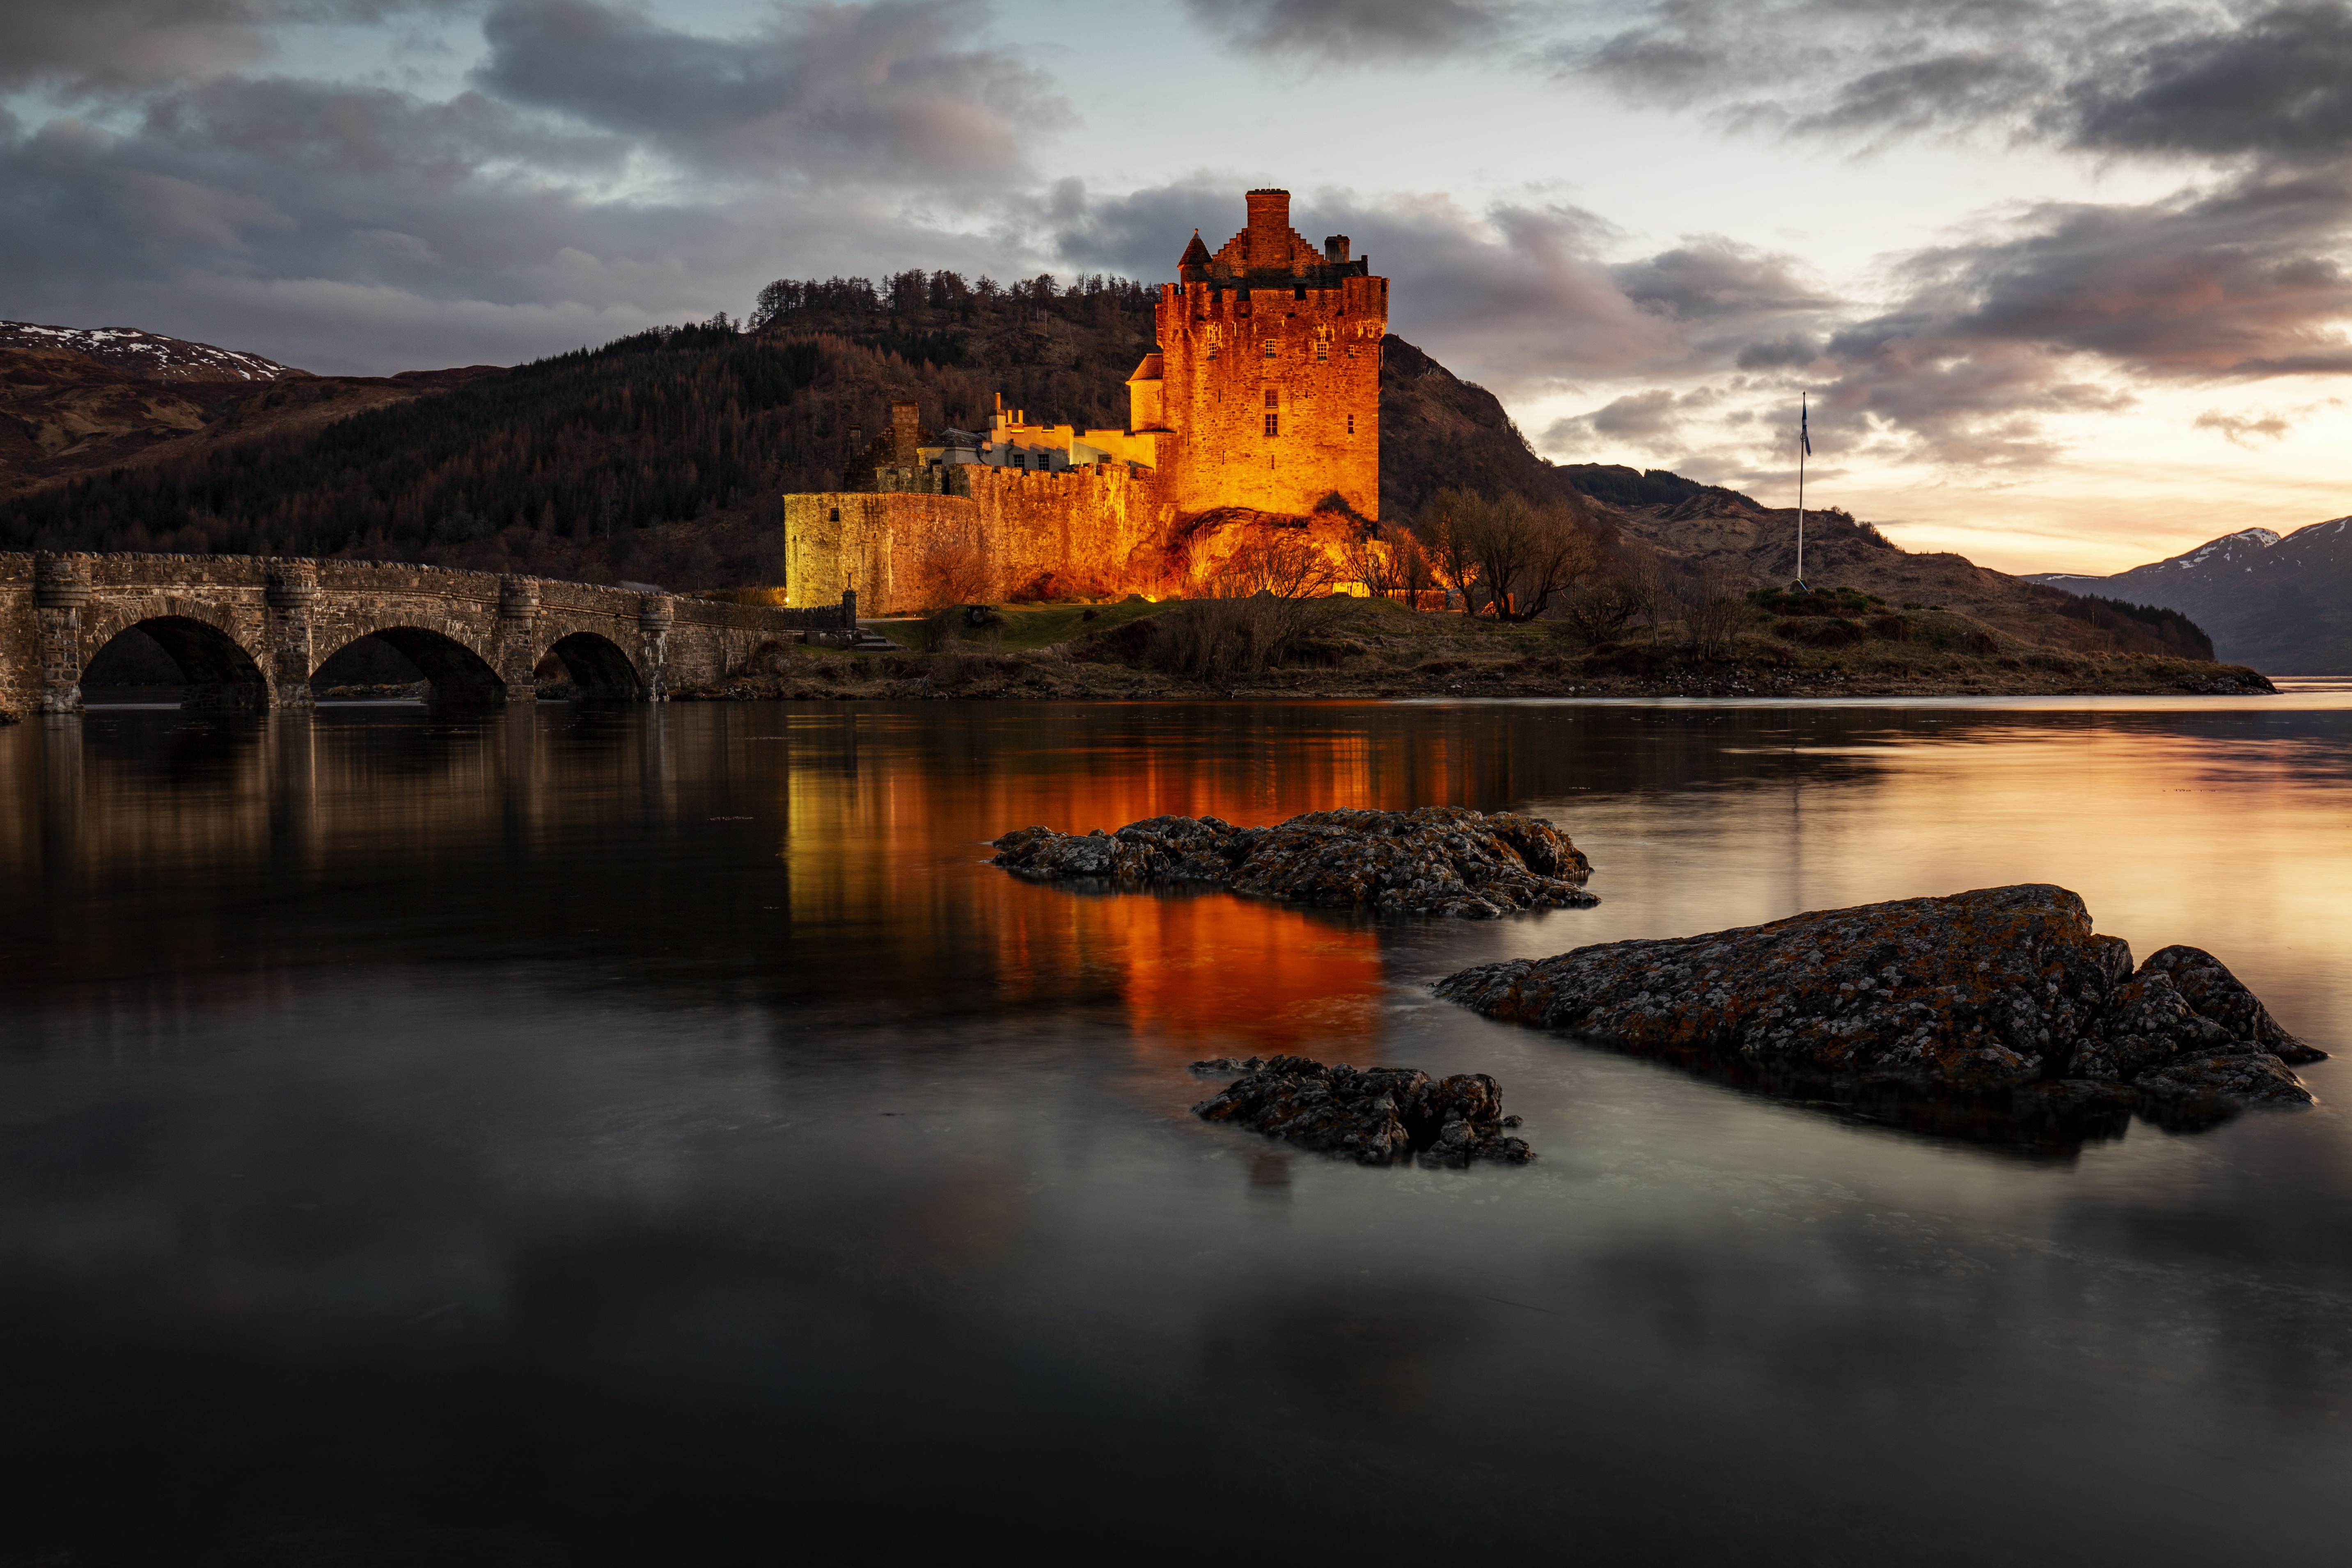 man made, eilean donan castle, bridge, castle, lake, scotland, castles